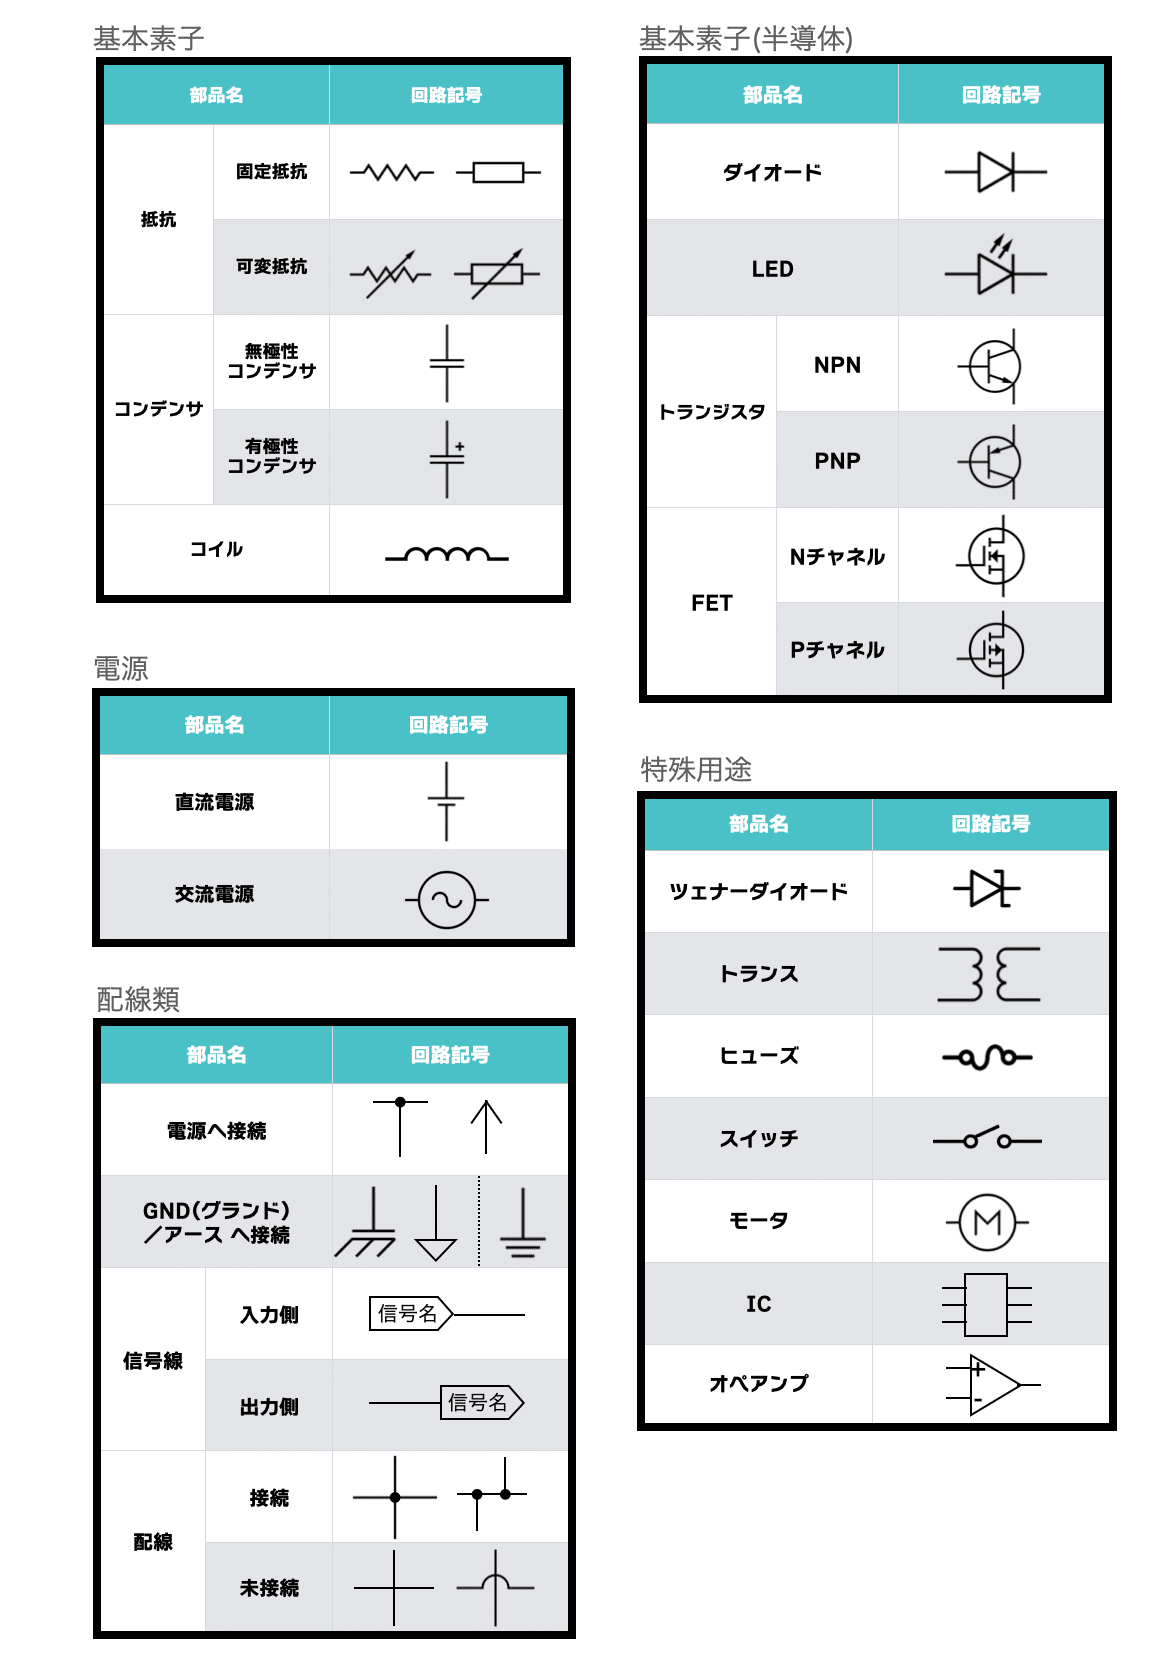 Microcontroller Board Features Comparison Table